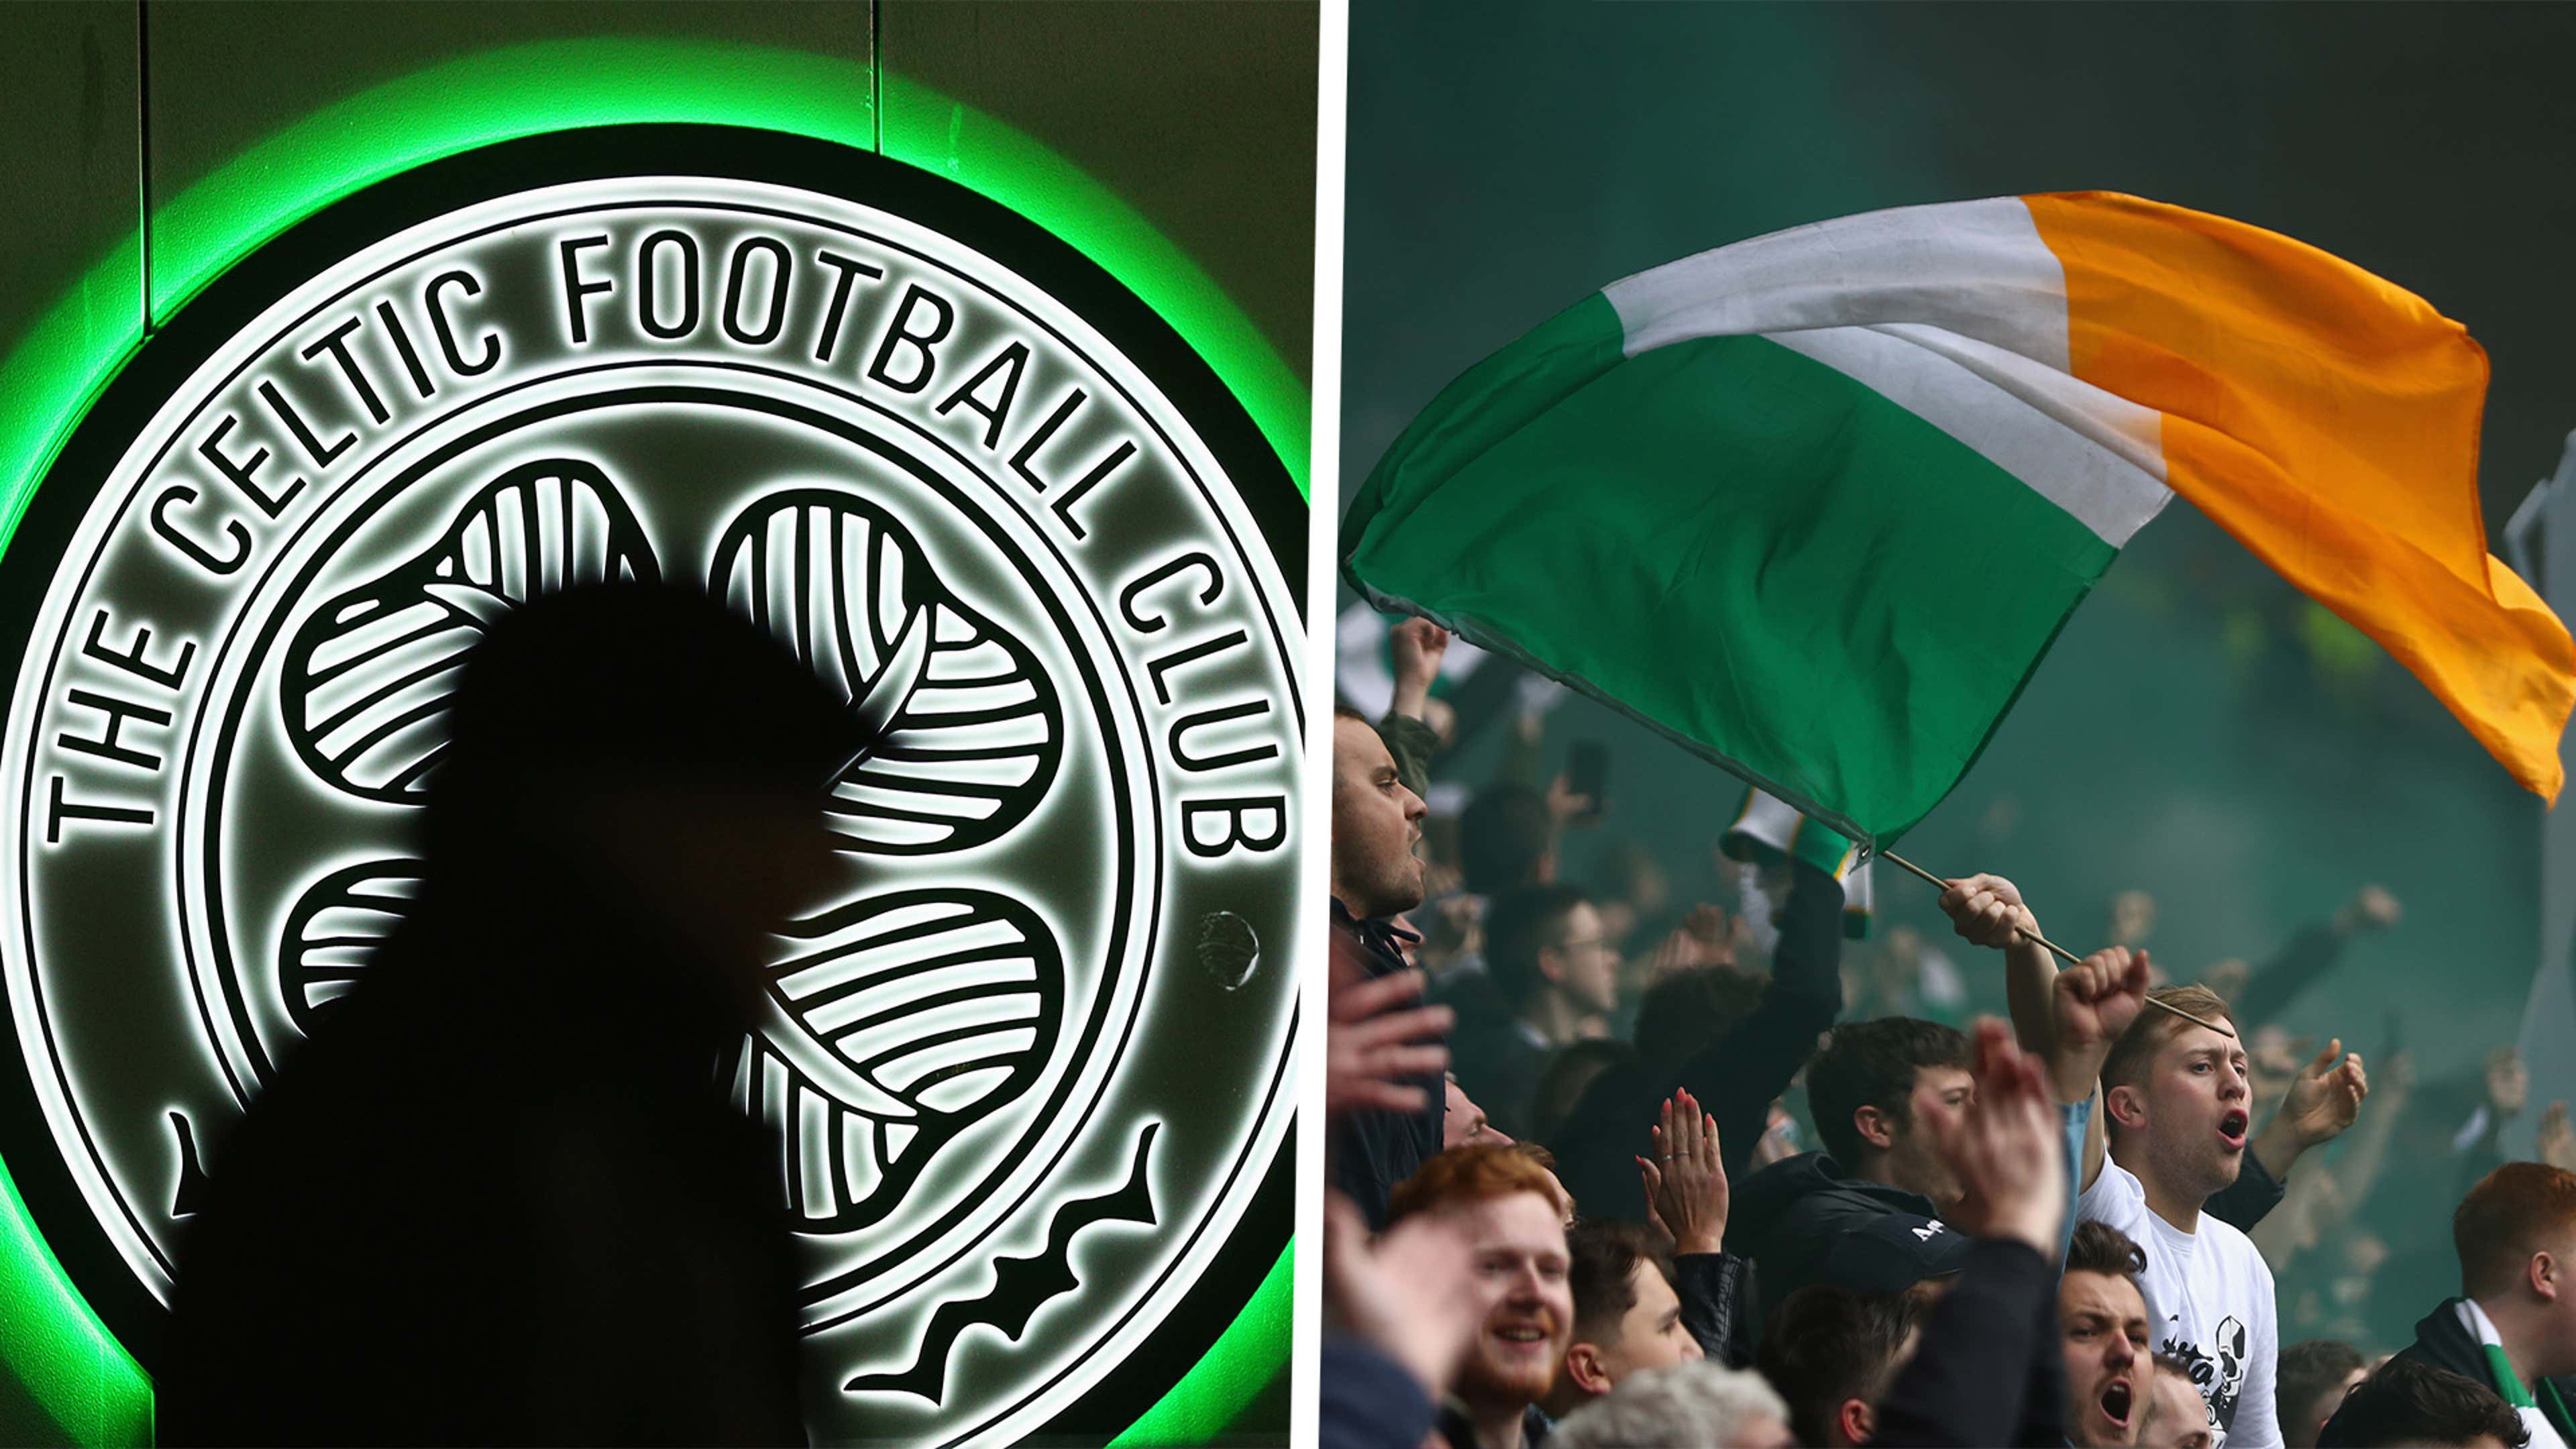 Celtic: More than a Football Club